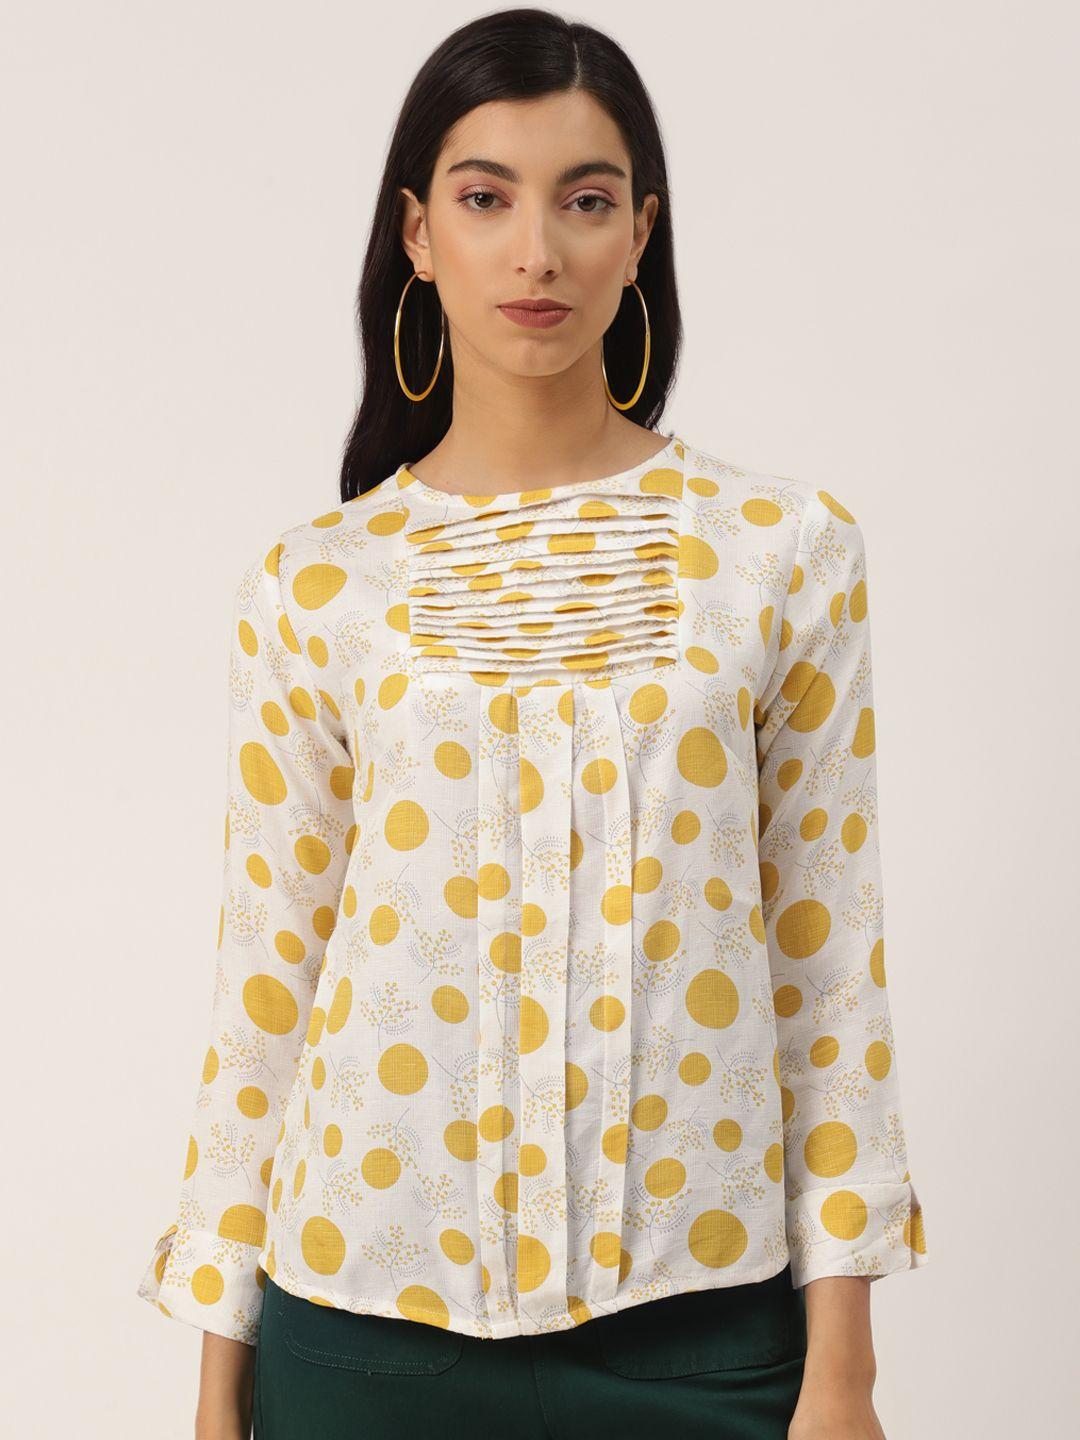 label regalia white & yellow geometric printed regular top